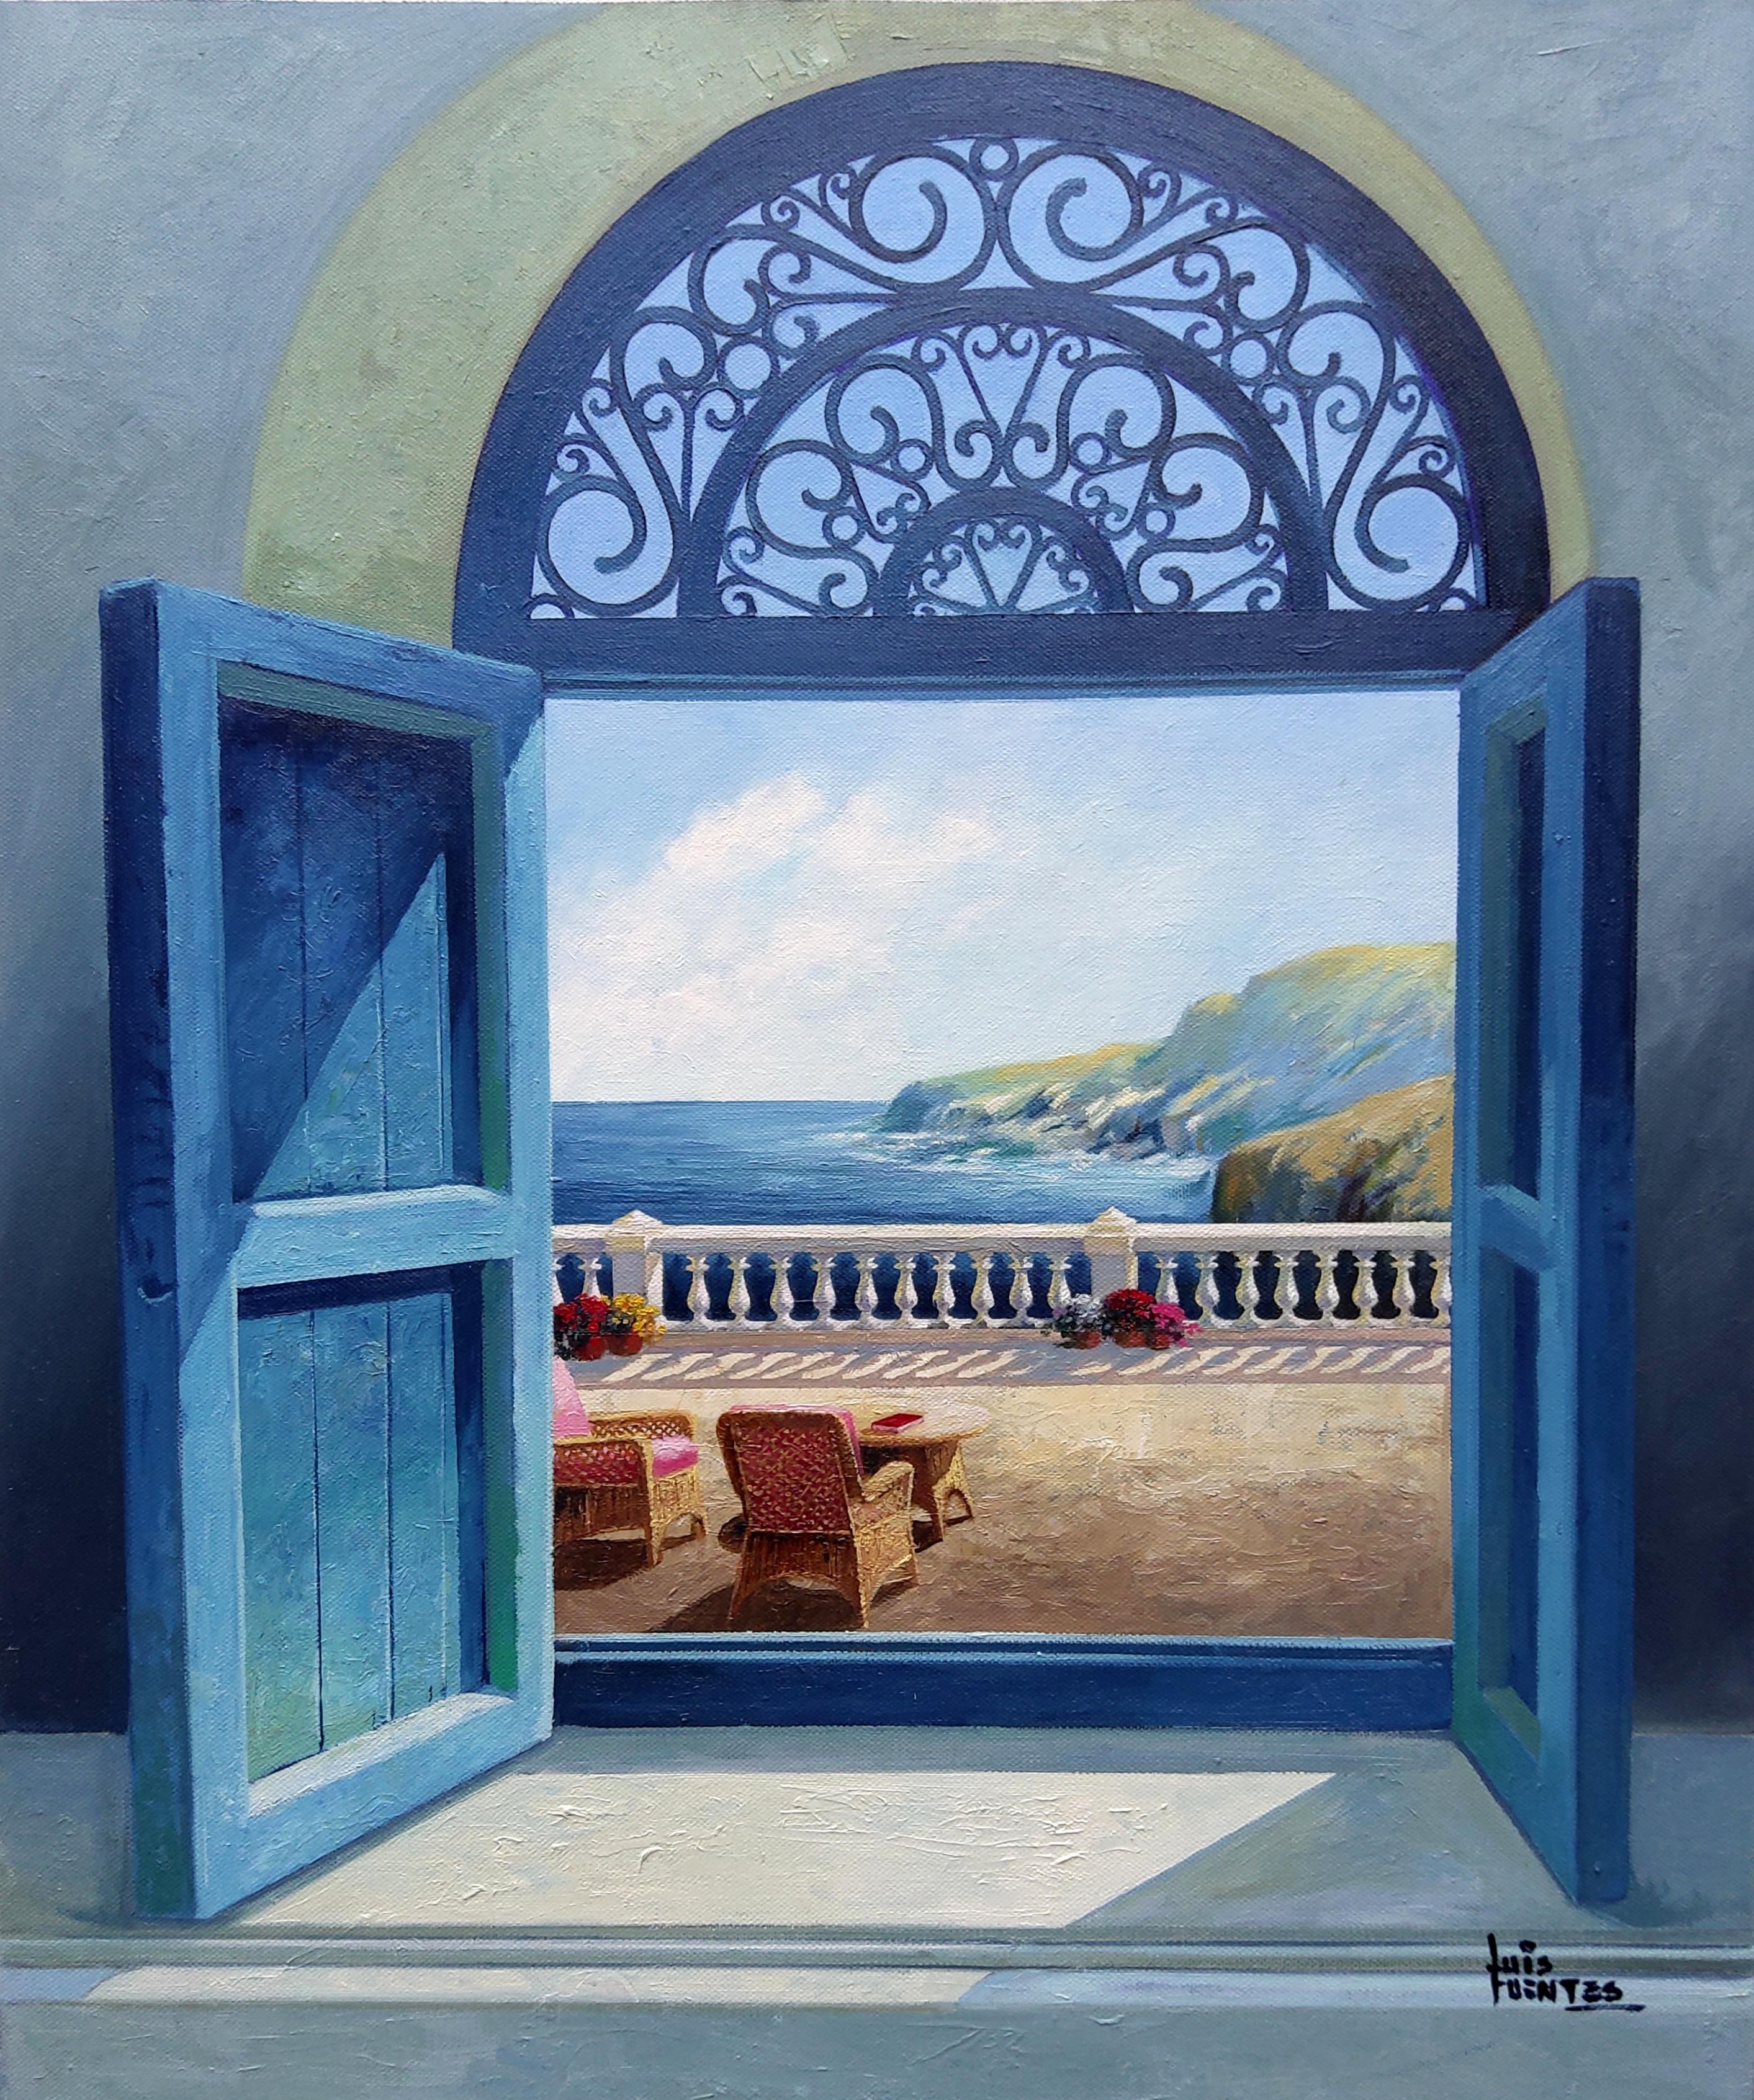 Luis Fuentes Landscape Painting - Escape to Happiness-original surreal seascape still life oil painting-modern Art